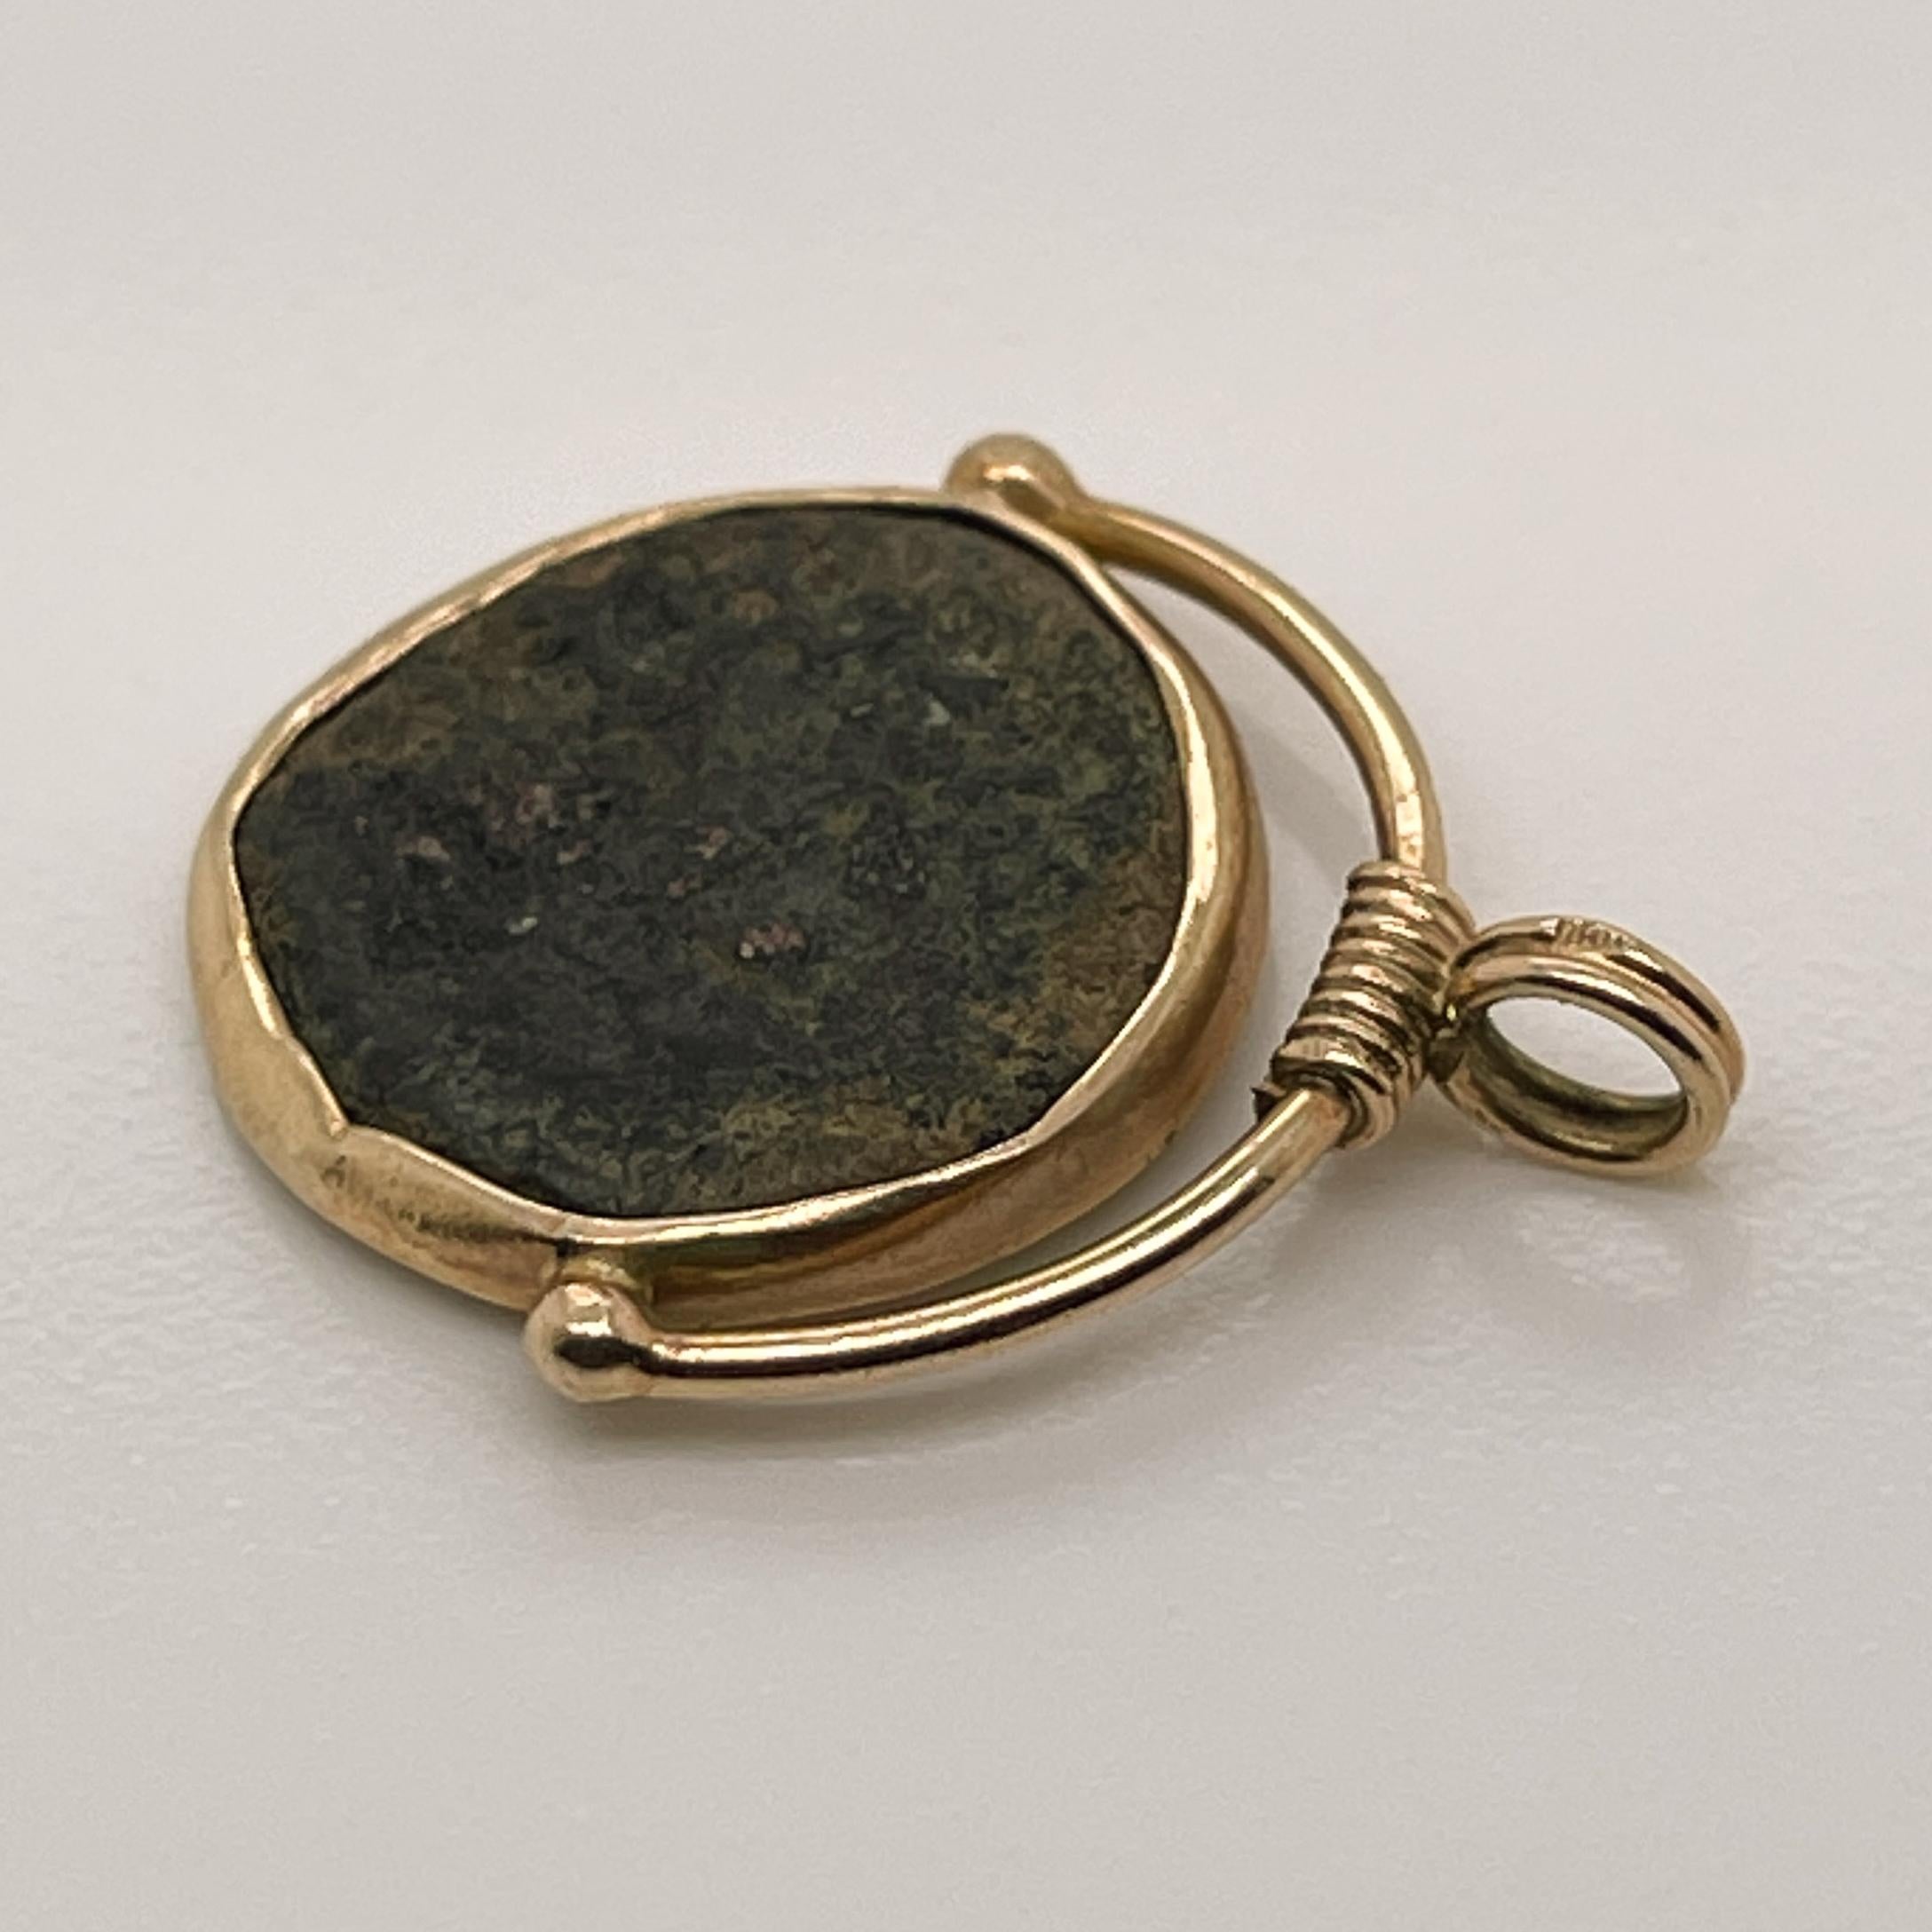 Ancient Jewish Roman Wars Bronze Coin Mounted in a 14 Karat Gold Pendant, VR 8